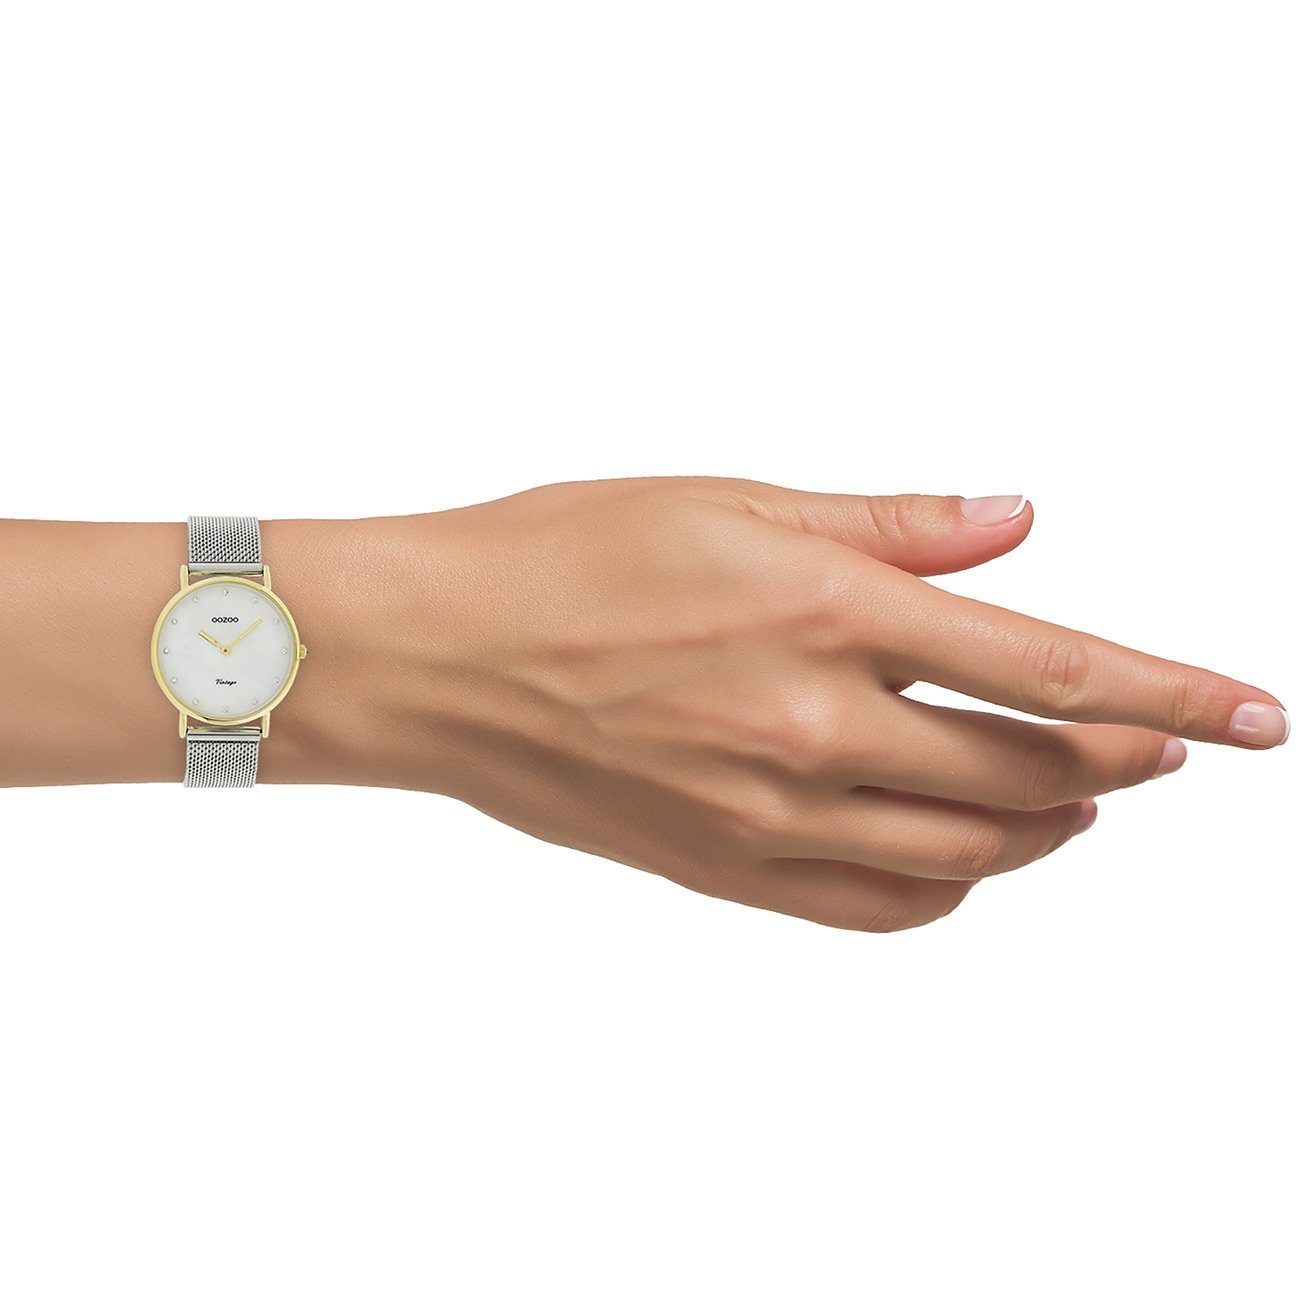 Fashion-Style Oozoo Edelstahlarmband, 32mm) Armbanduhr Damenuhr silber, OOZOO mittel rund, (ca. Quarzuhr Damen